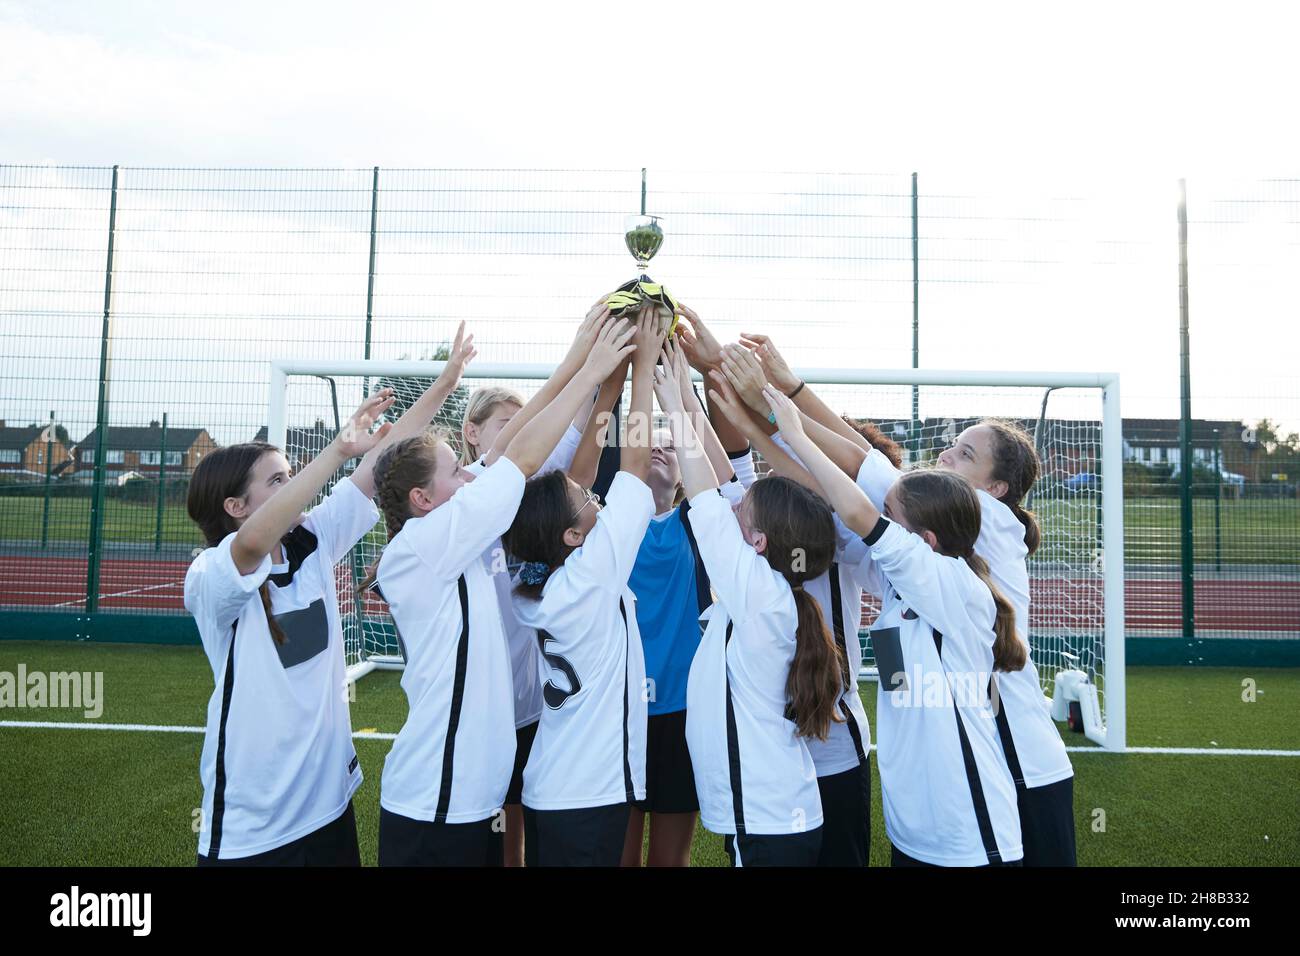 UK, Girls soccer team (10-11, 12-13) holding trophy in soccer field Stock Photo